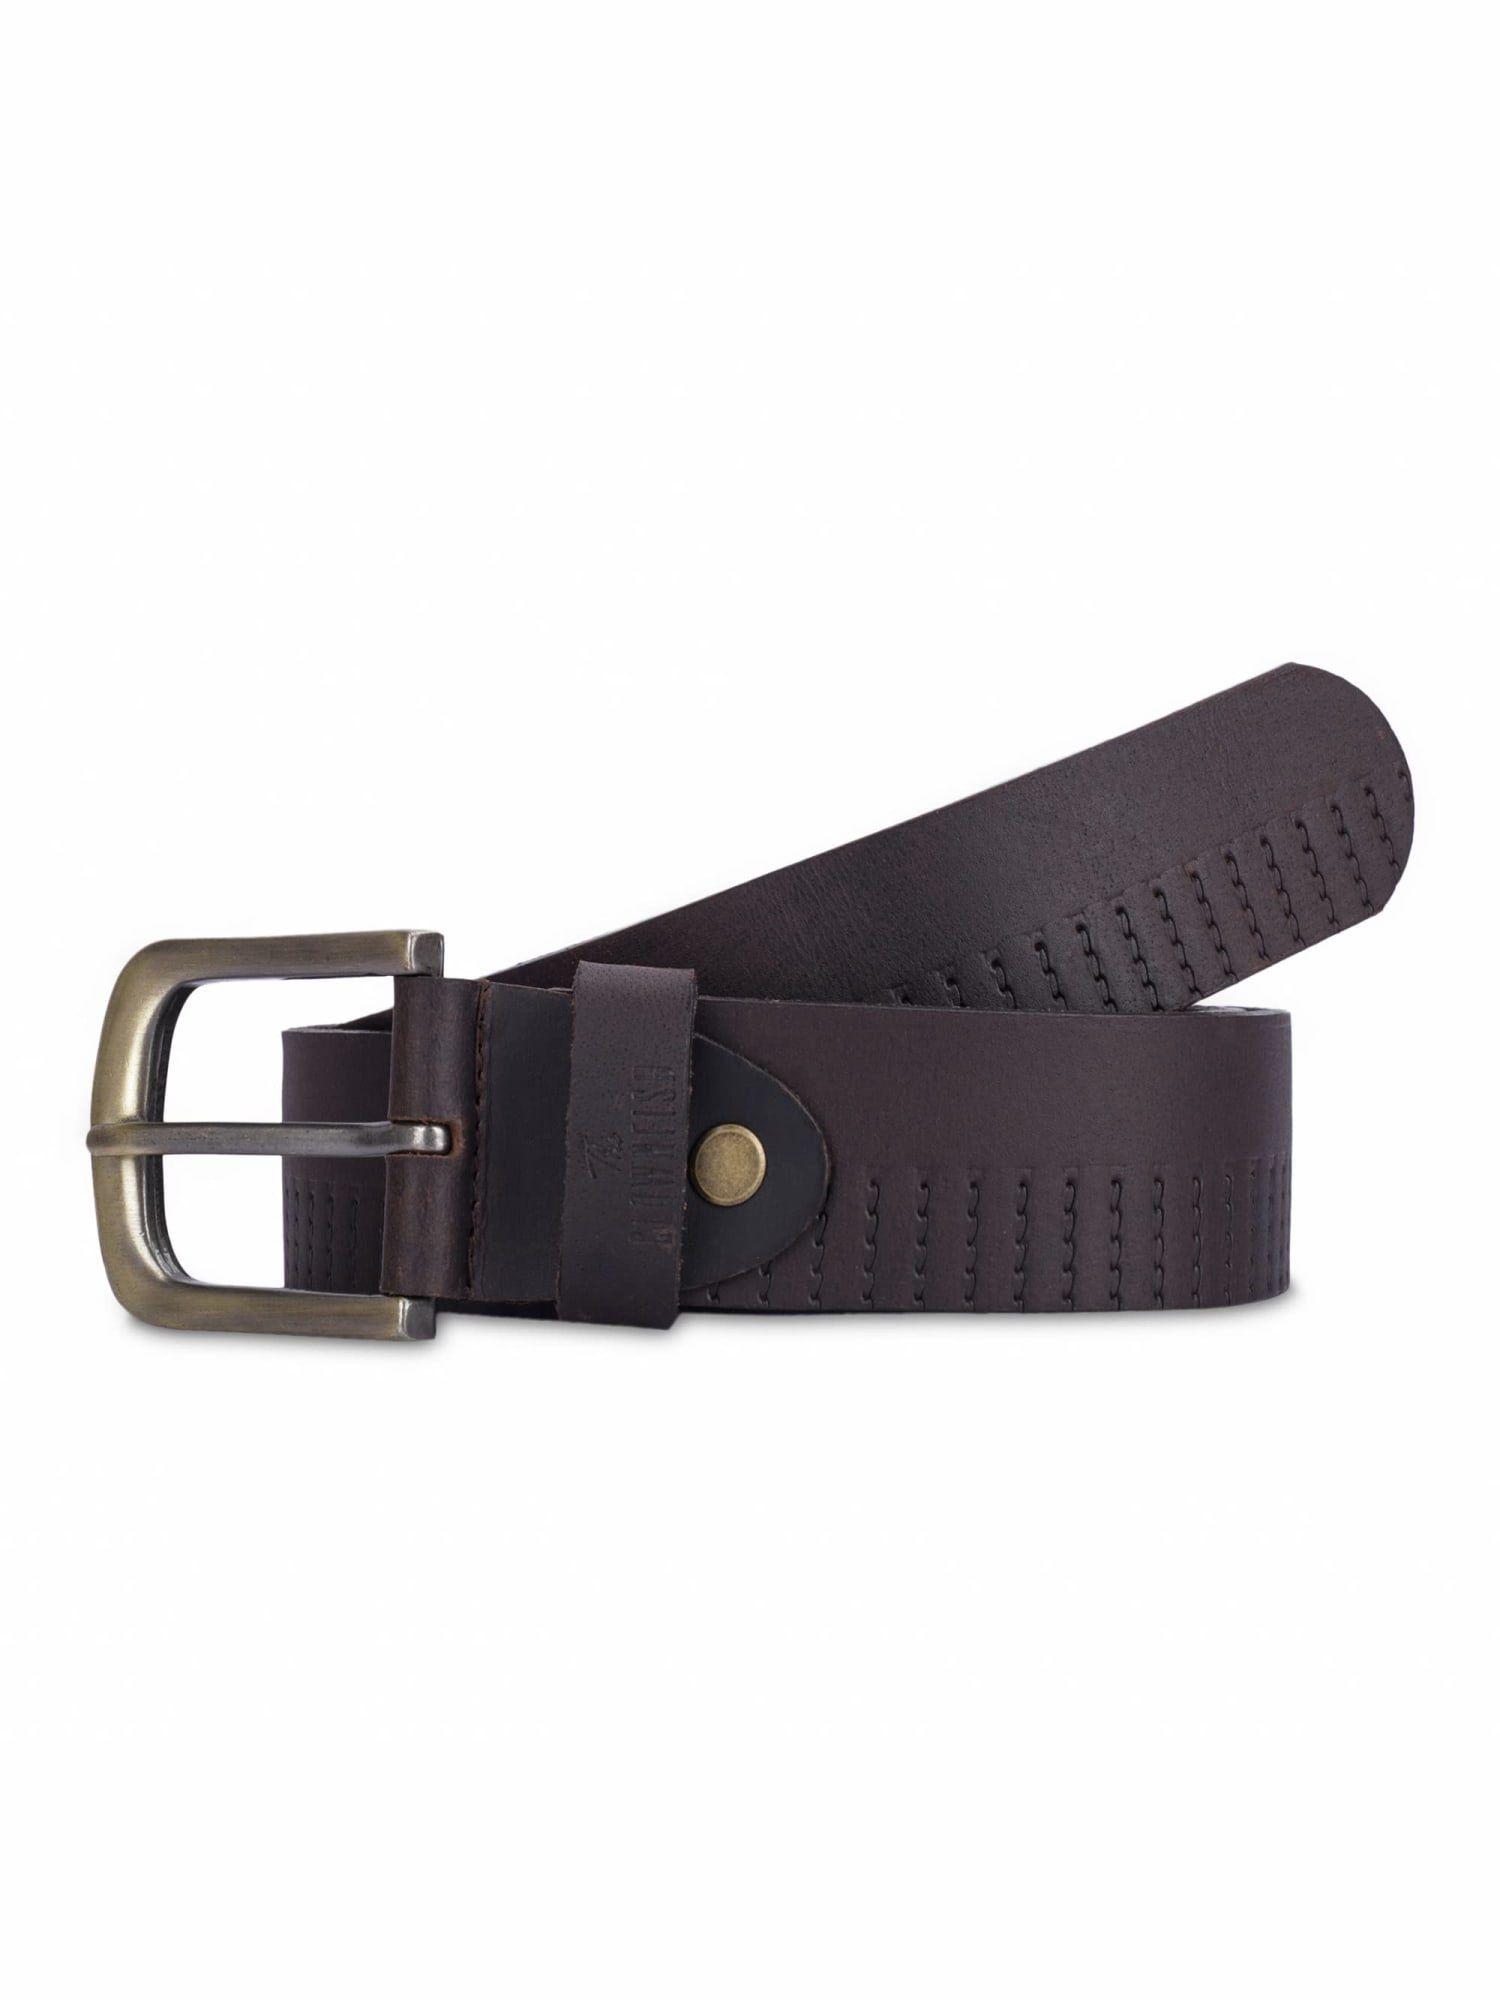 men's genuine leather belt